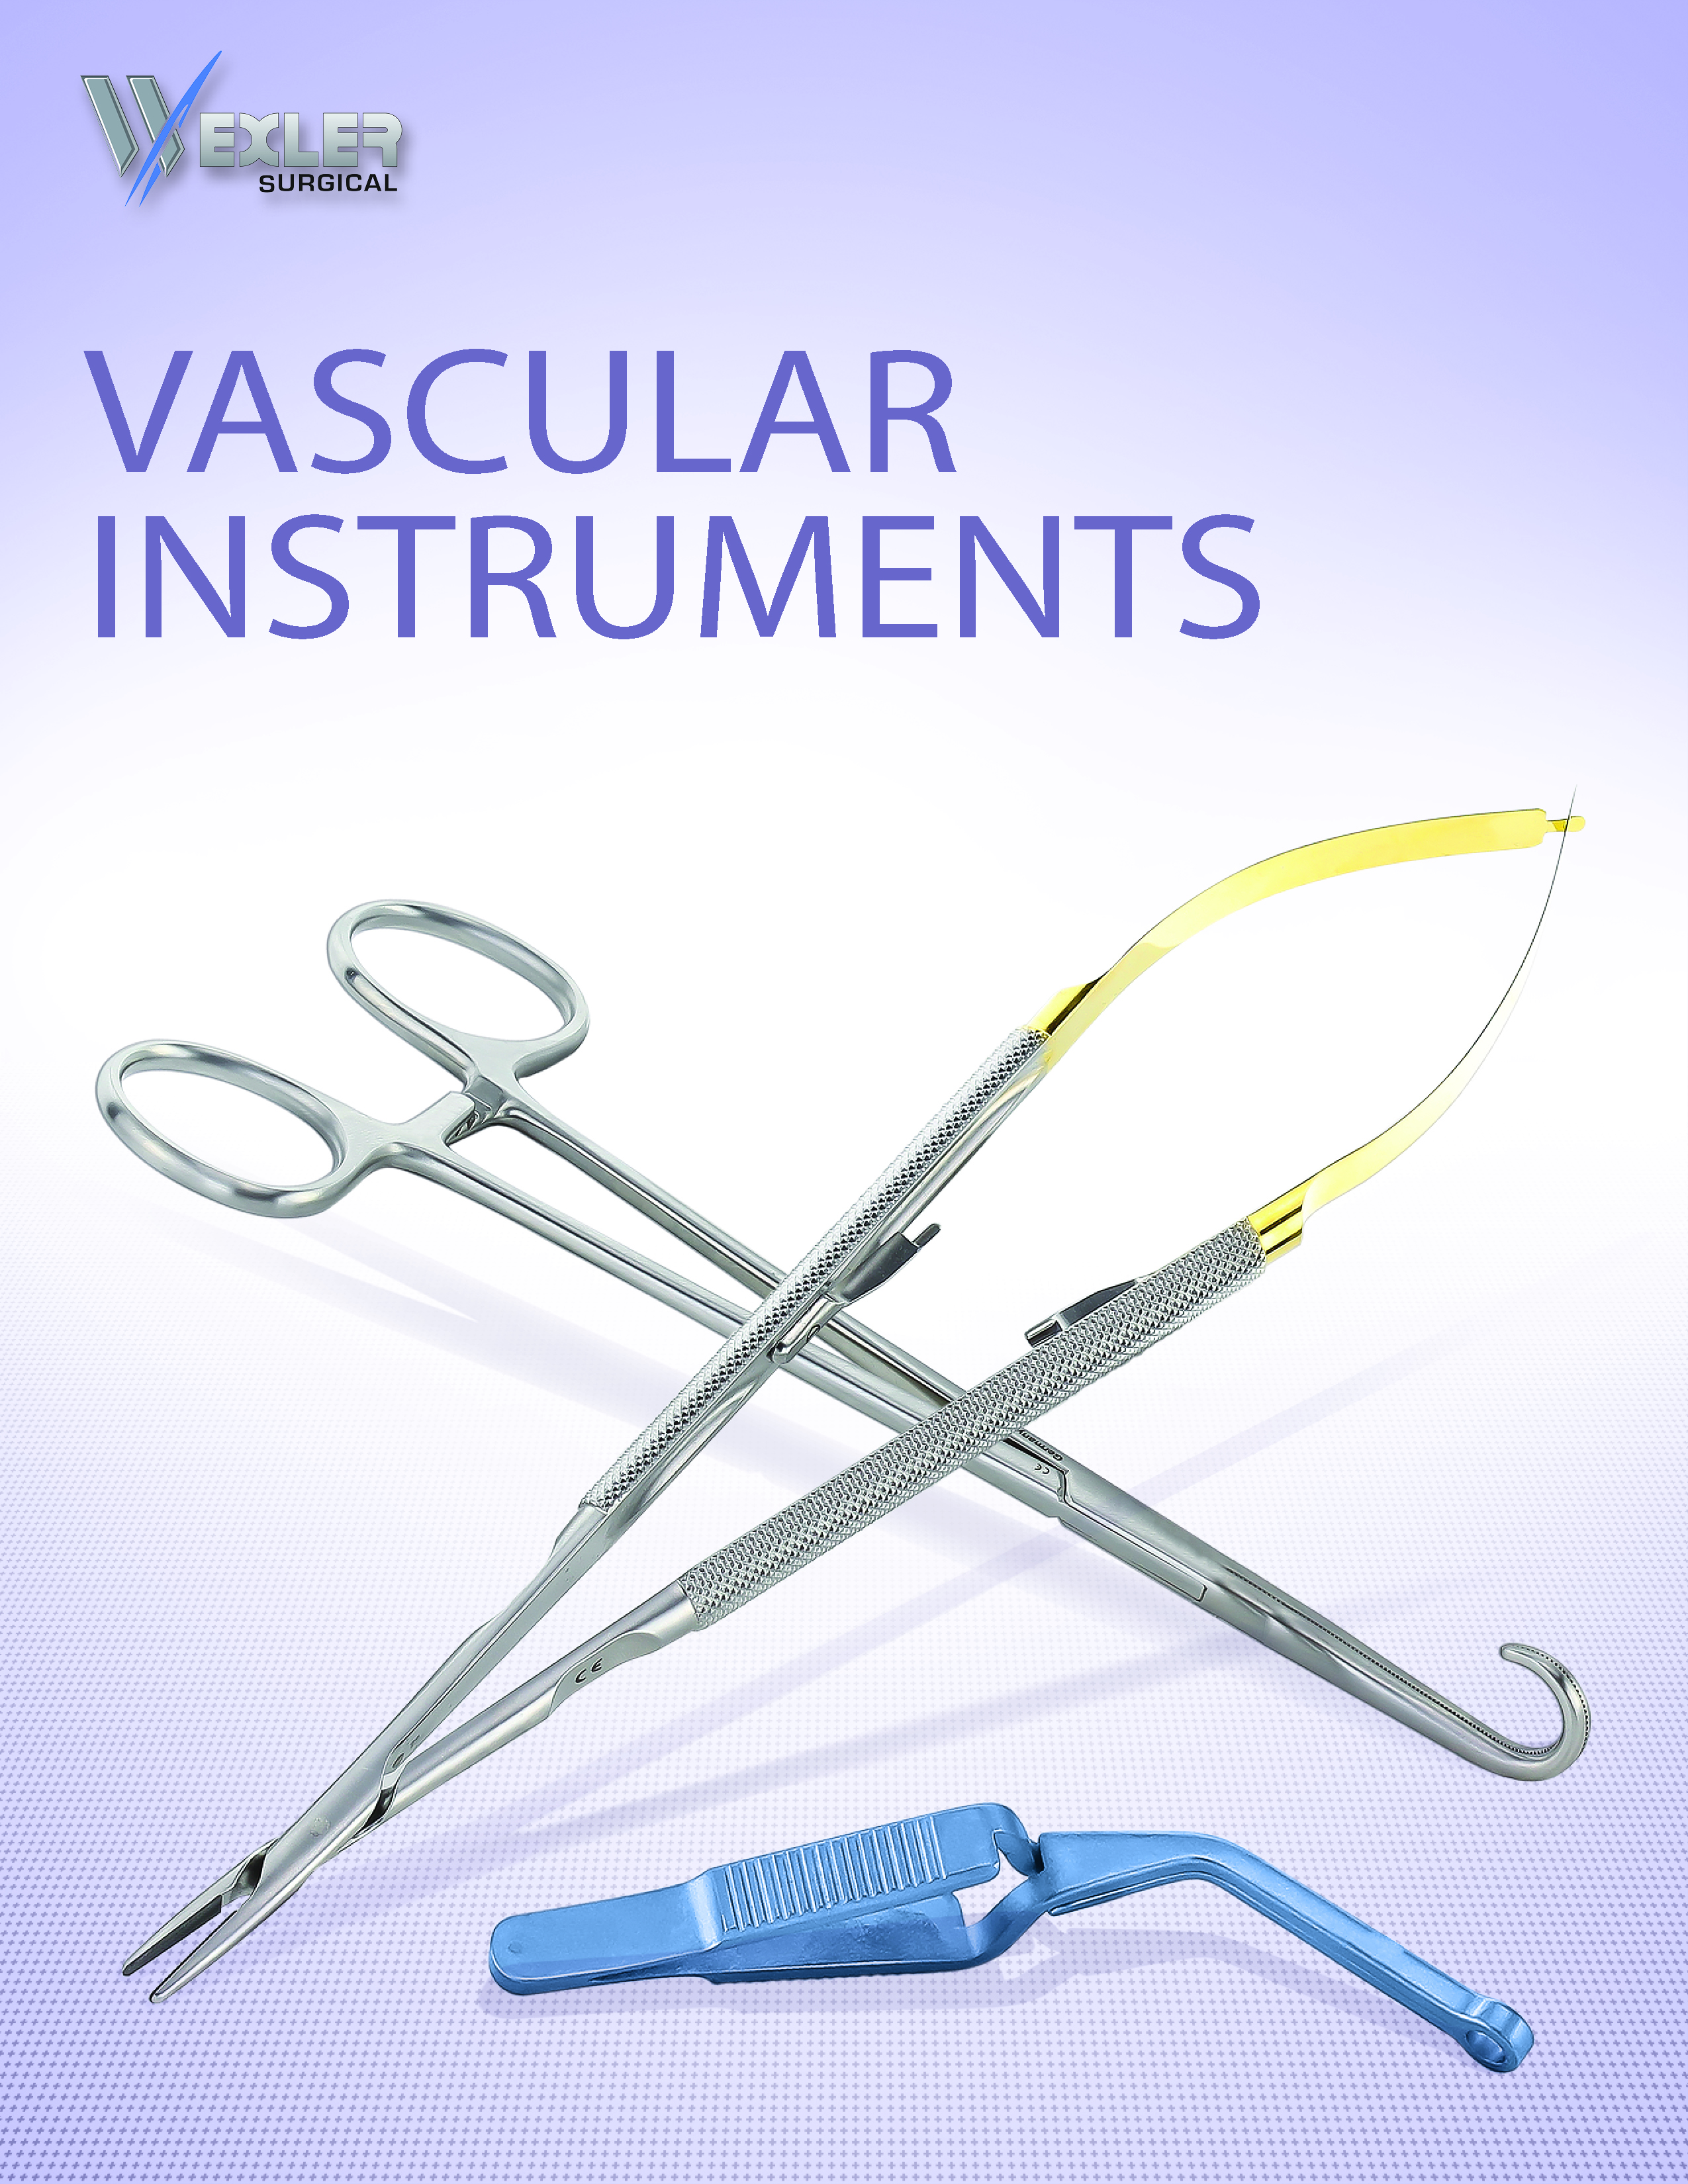 	Vascular Instruments